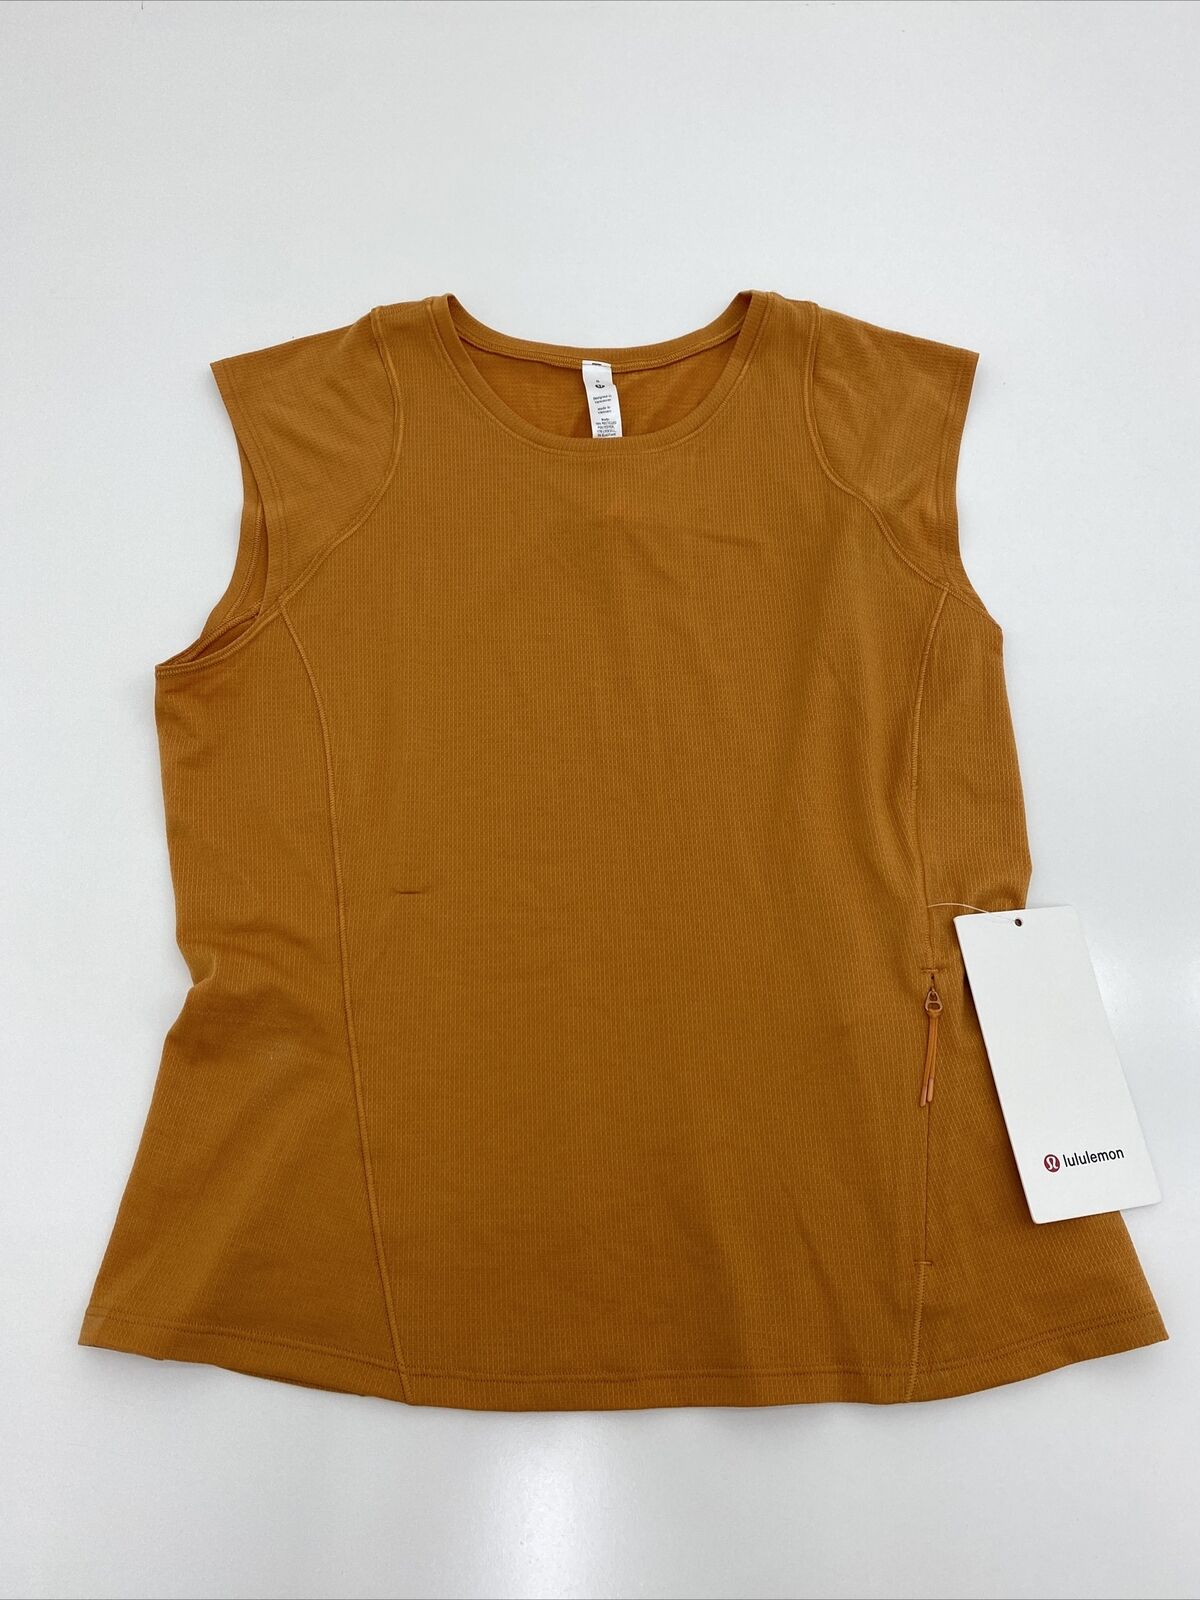 Lululemon Cap Sleeve Hiking Shirt Tank Top Auto Orange Women’s Size 8 New